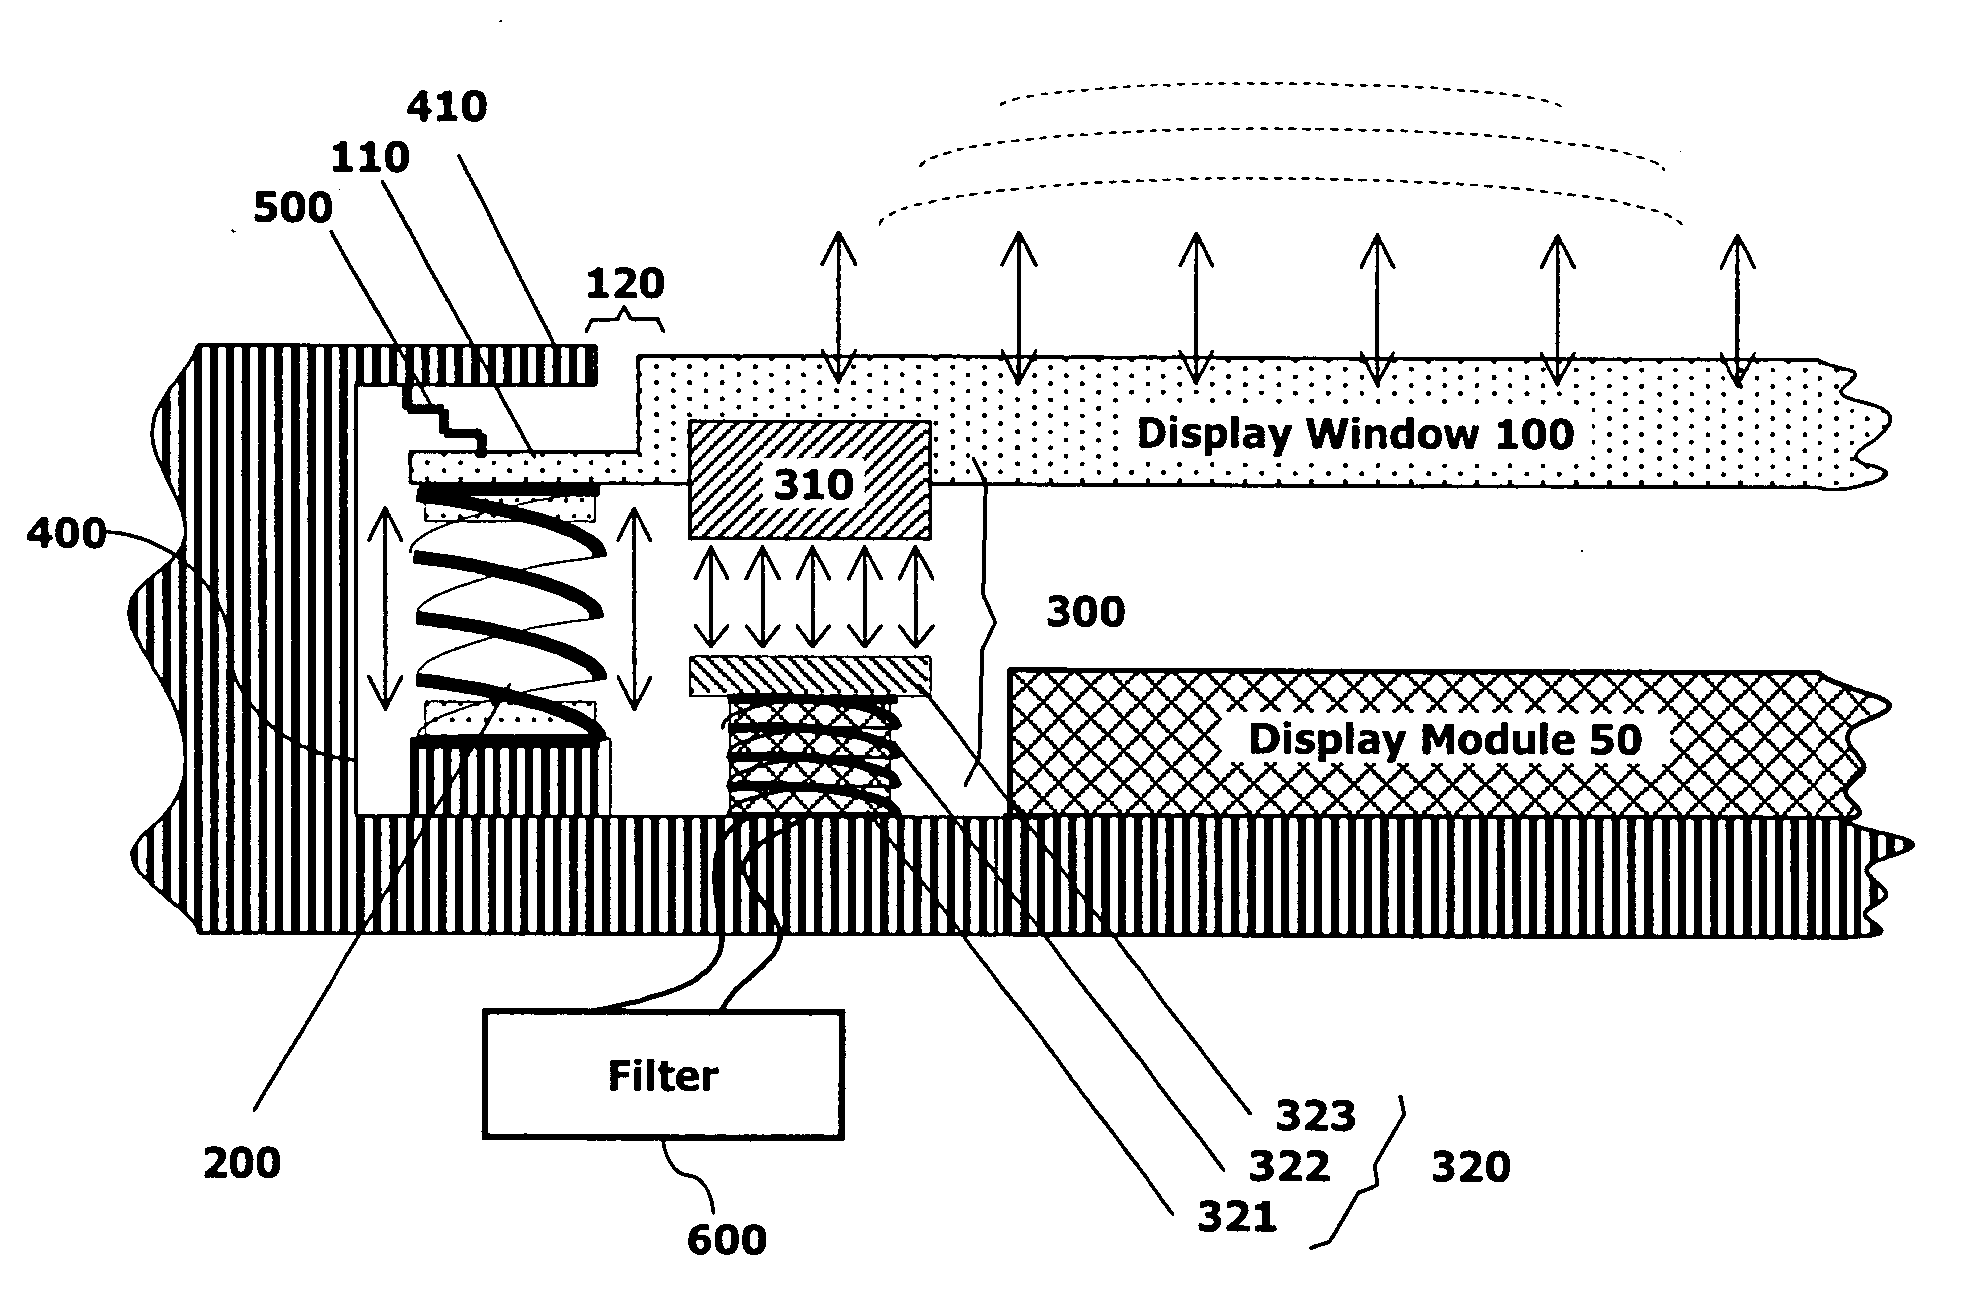 Speaker apparatus using display window